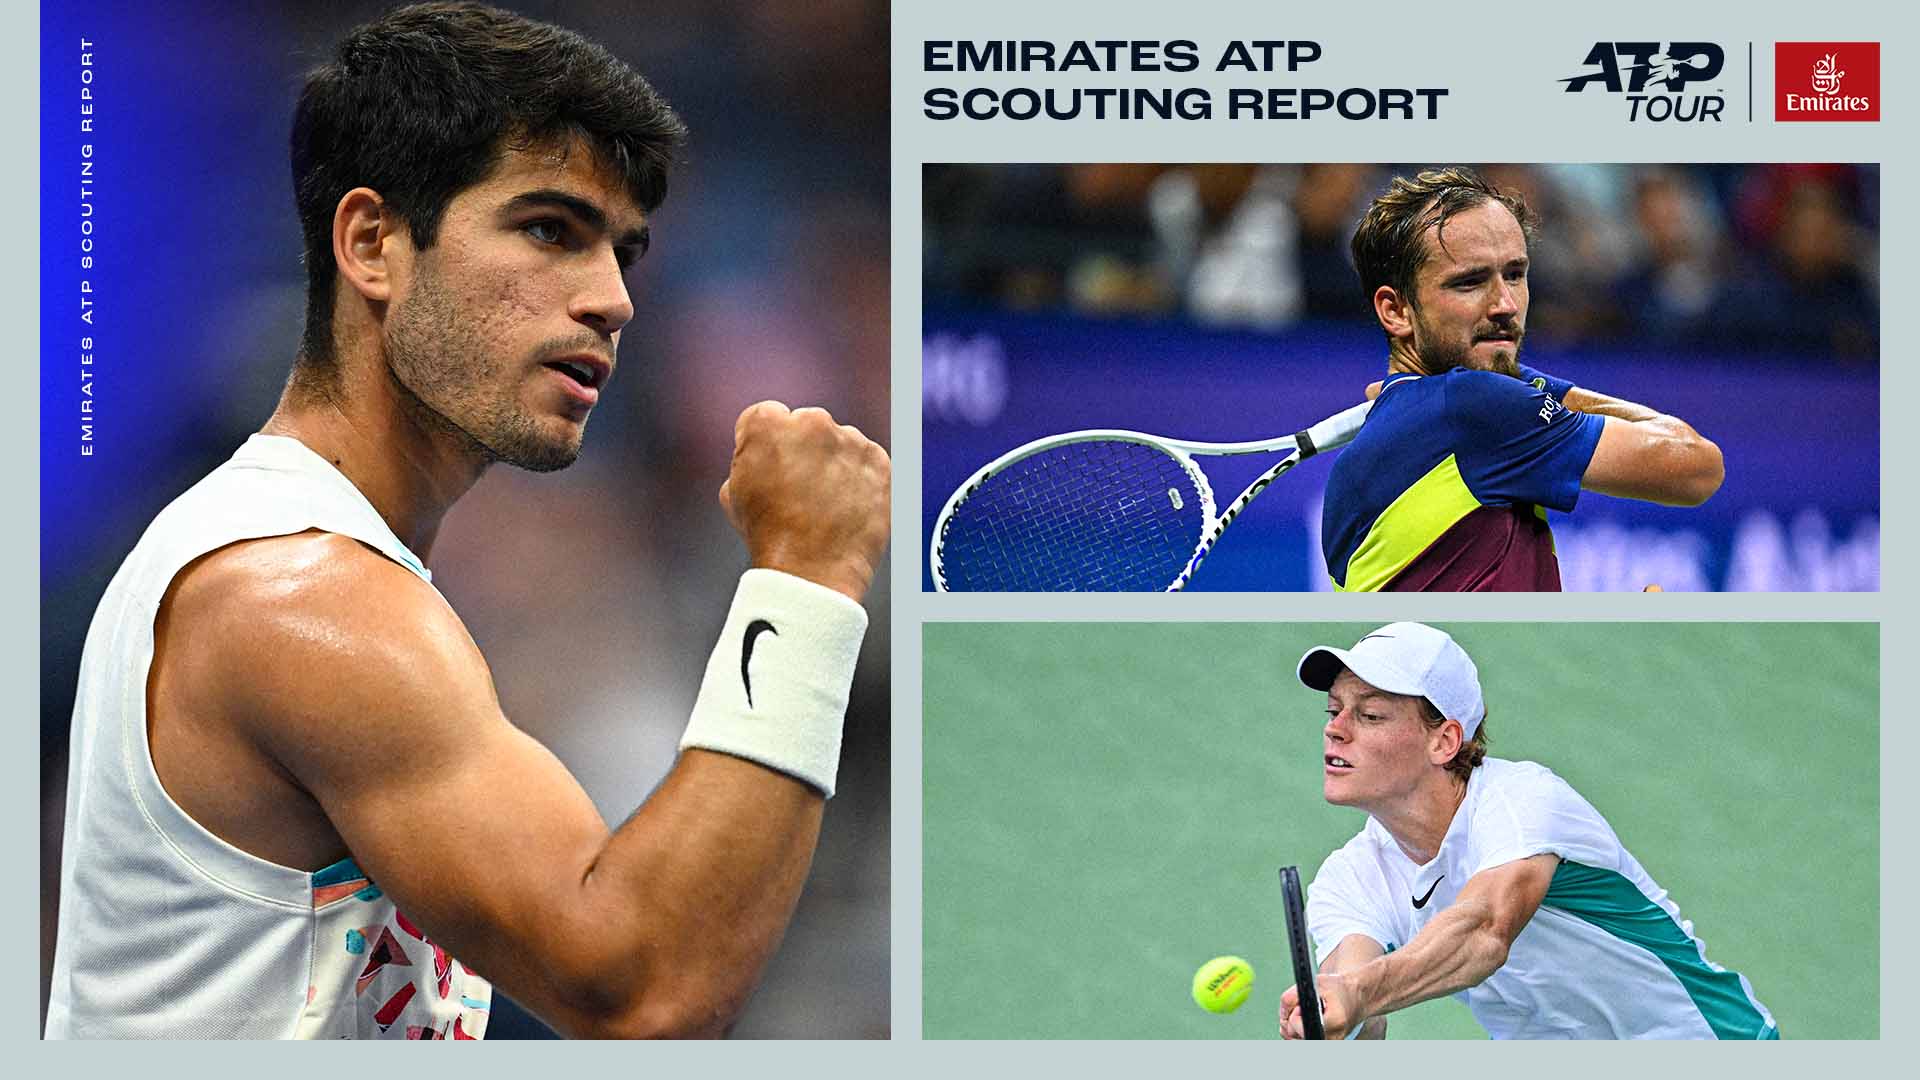 Rankings, Pepperstone ATP Rankings, ATP Tour